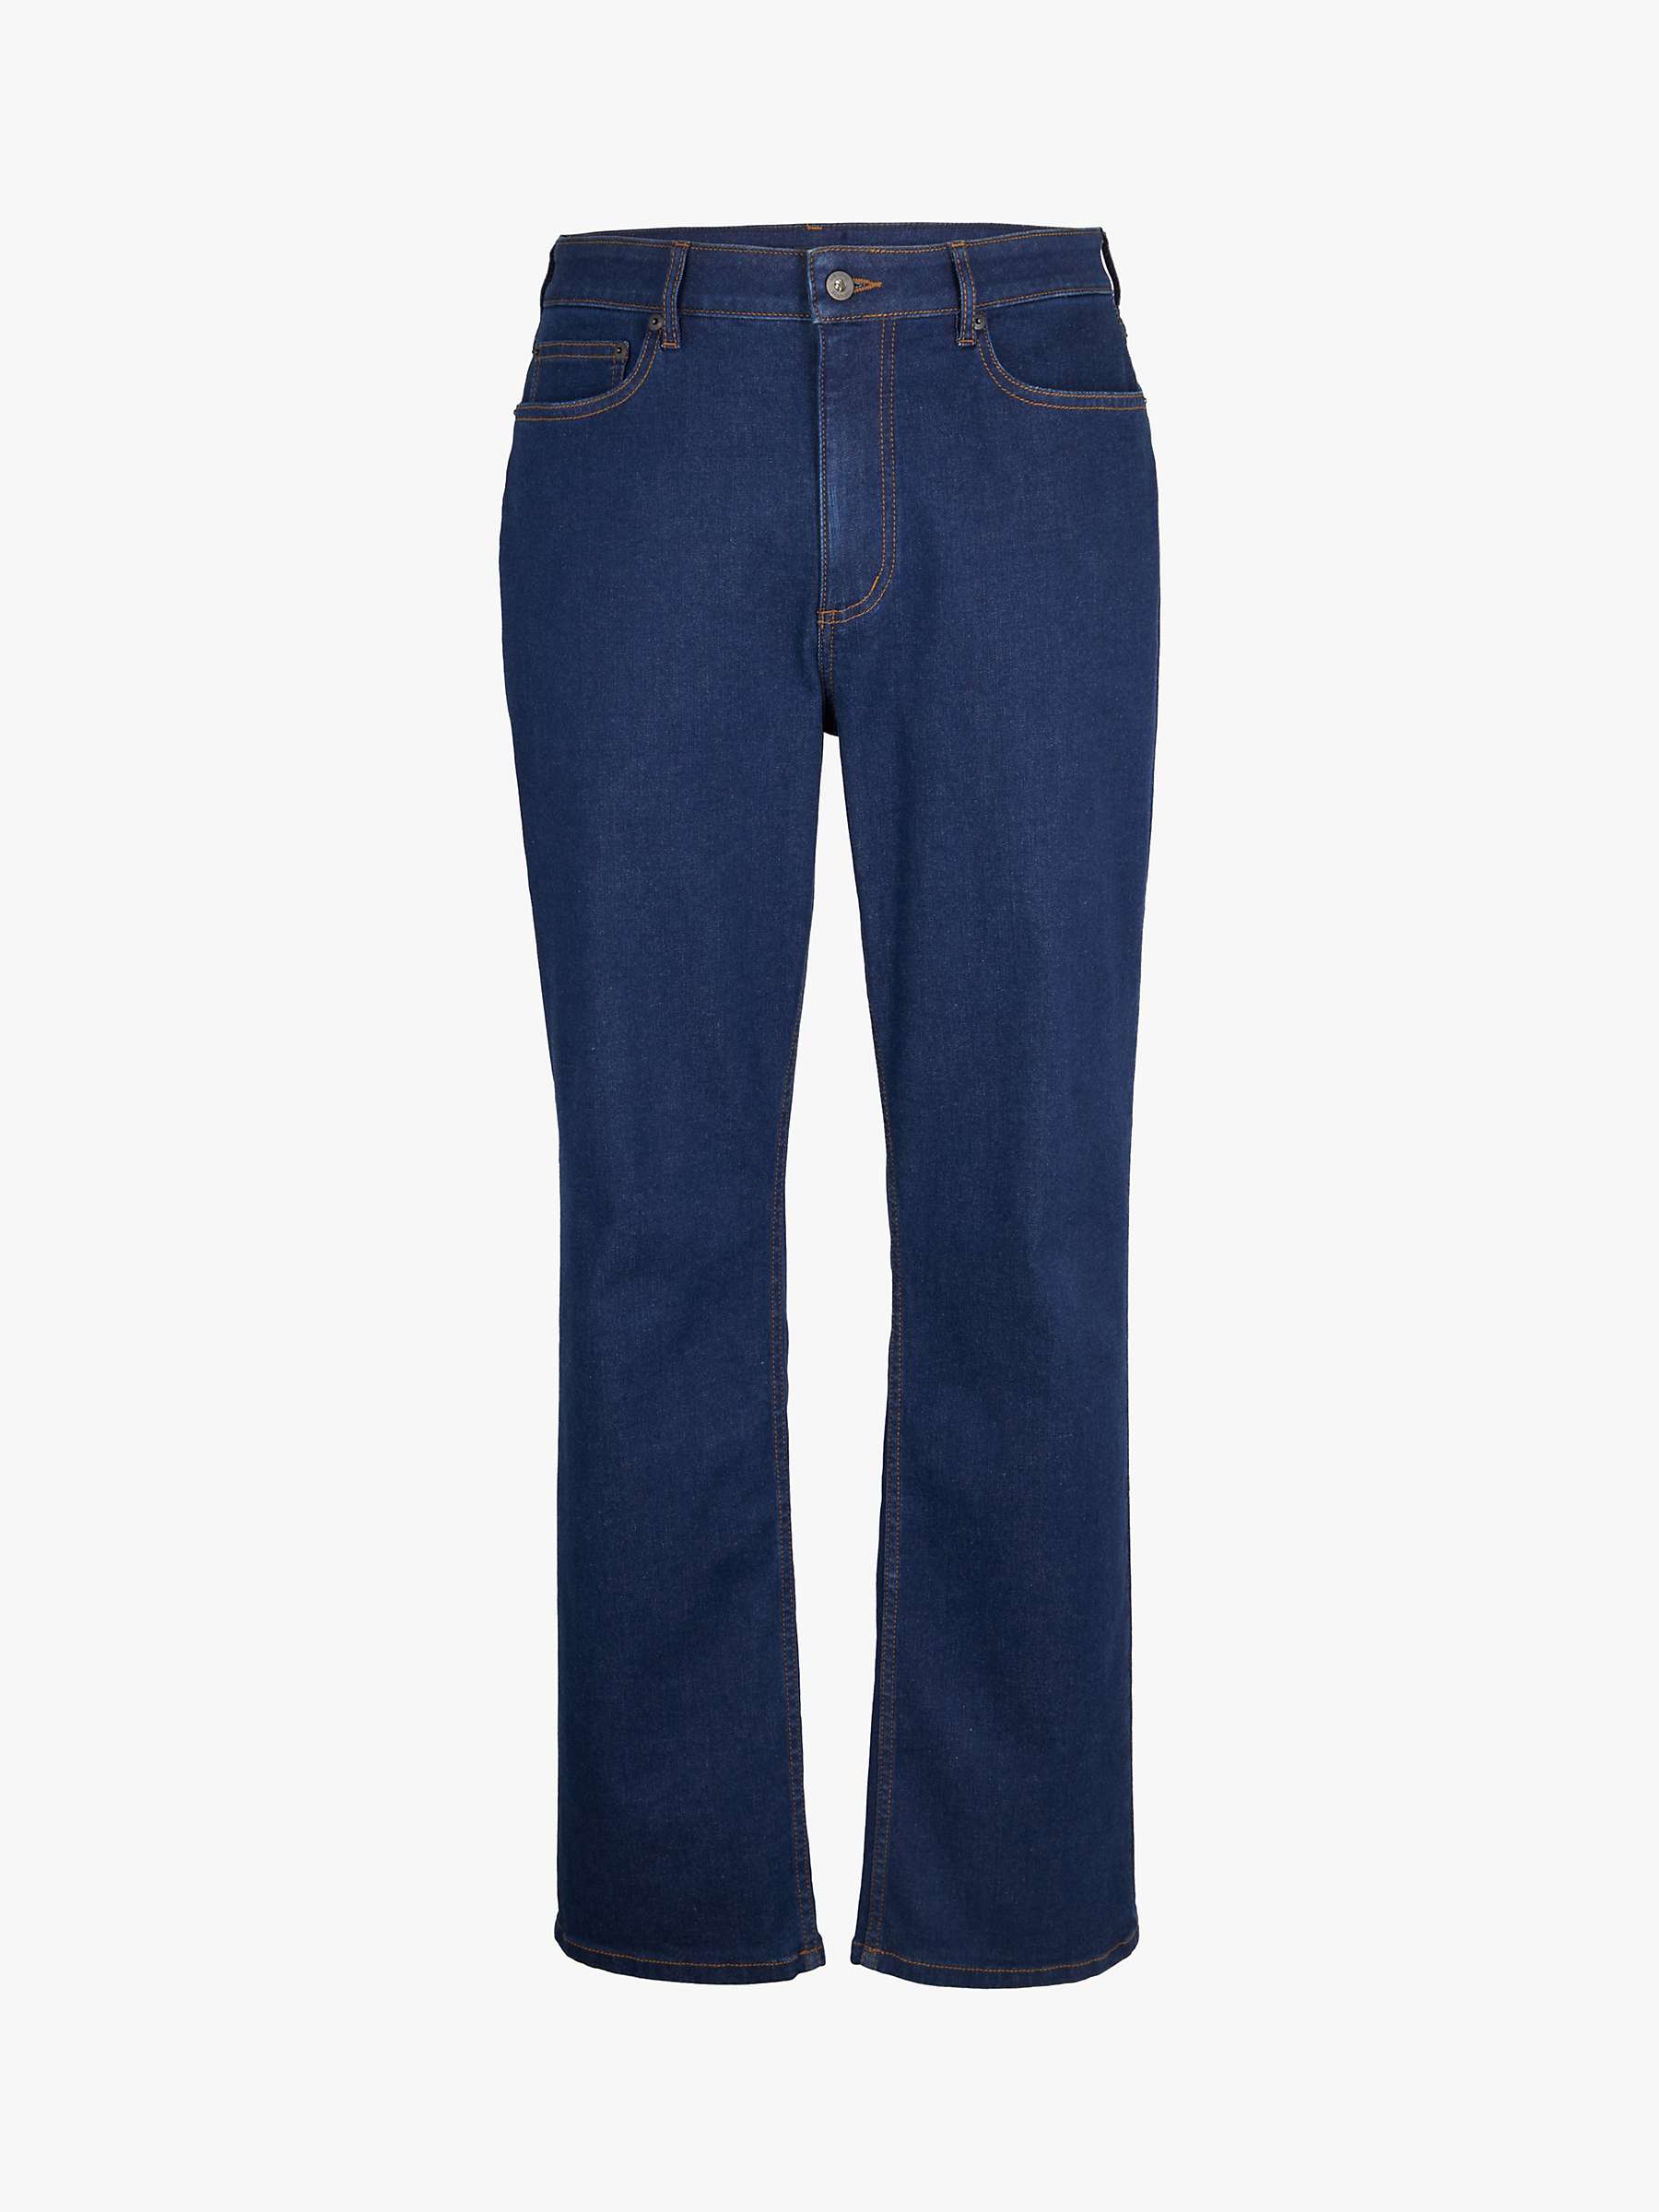 Buy Rohan Flex Classic Fit Stretch Jeans, Dark Denim Online at johnlewis.com